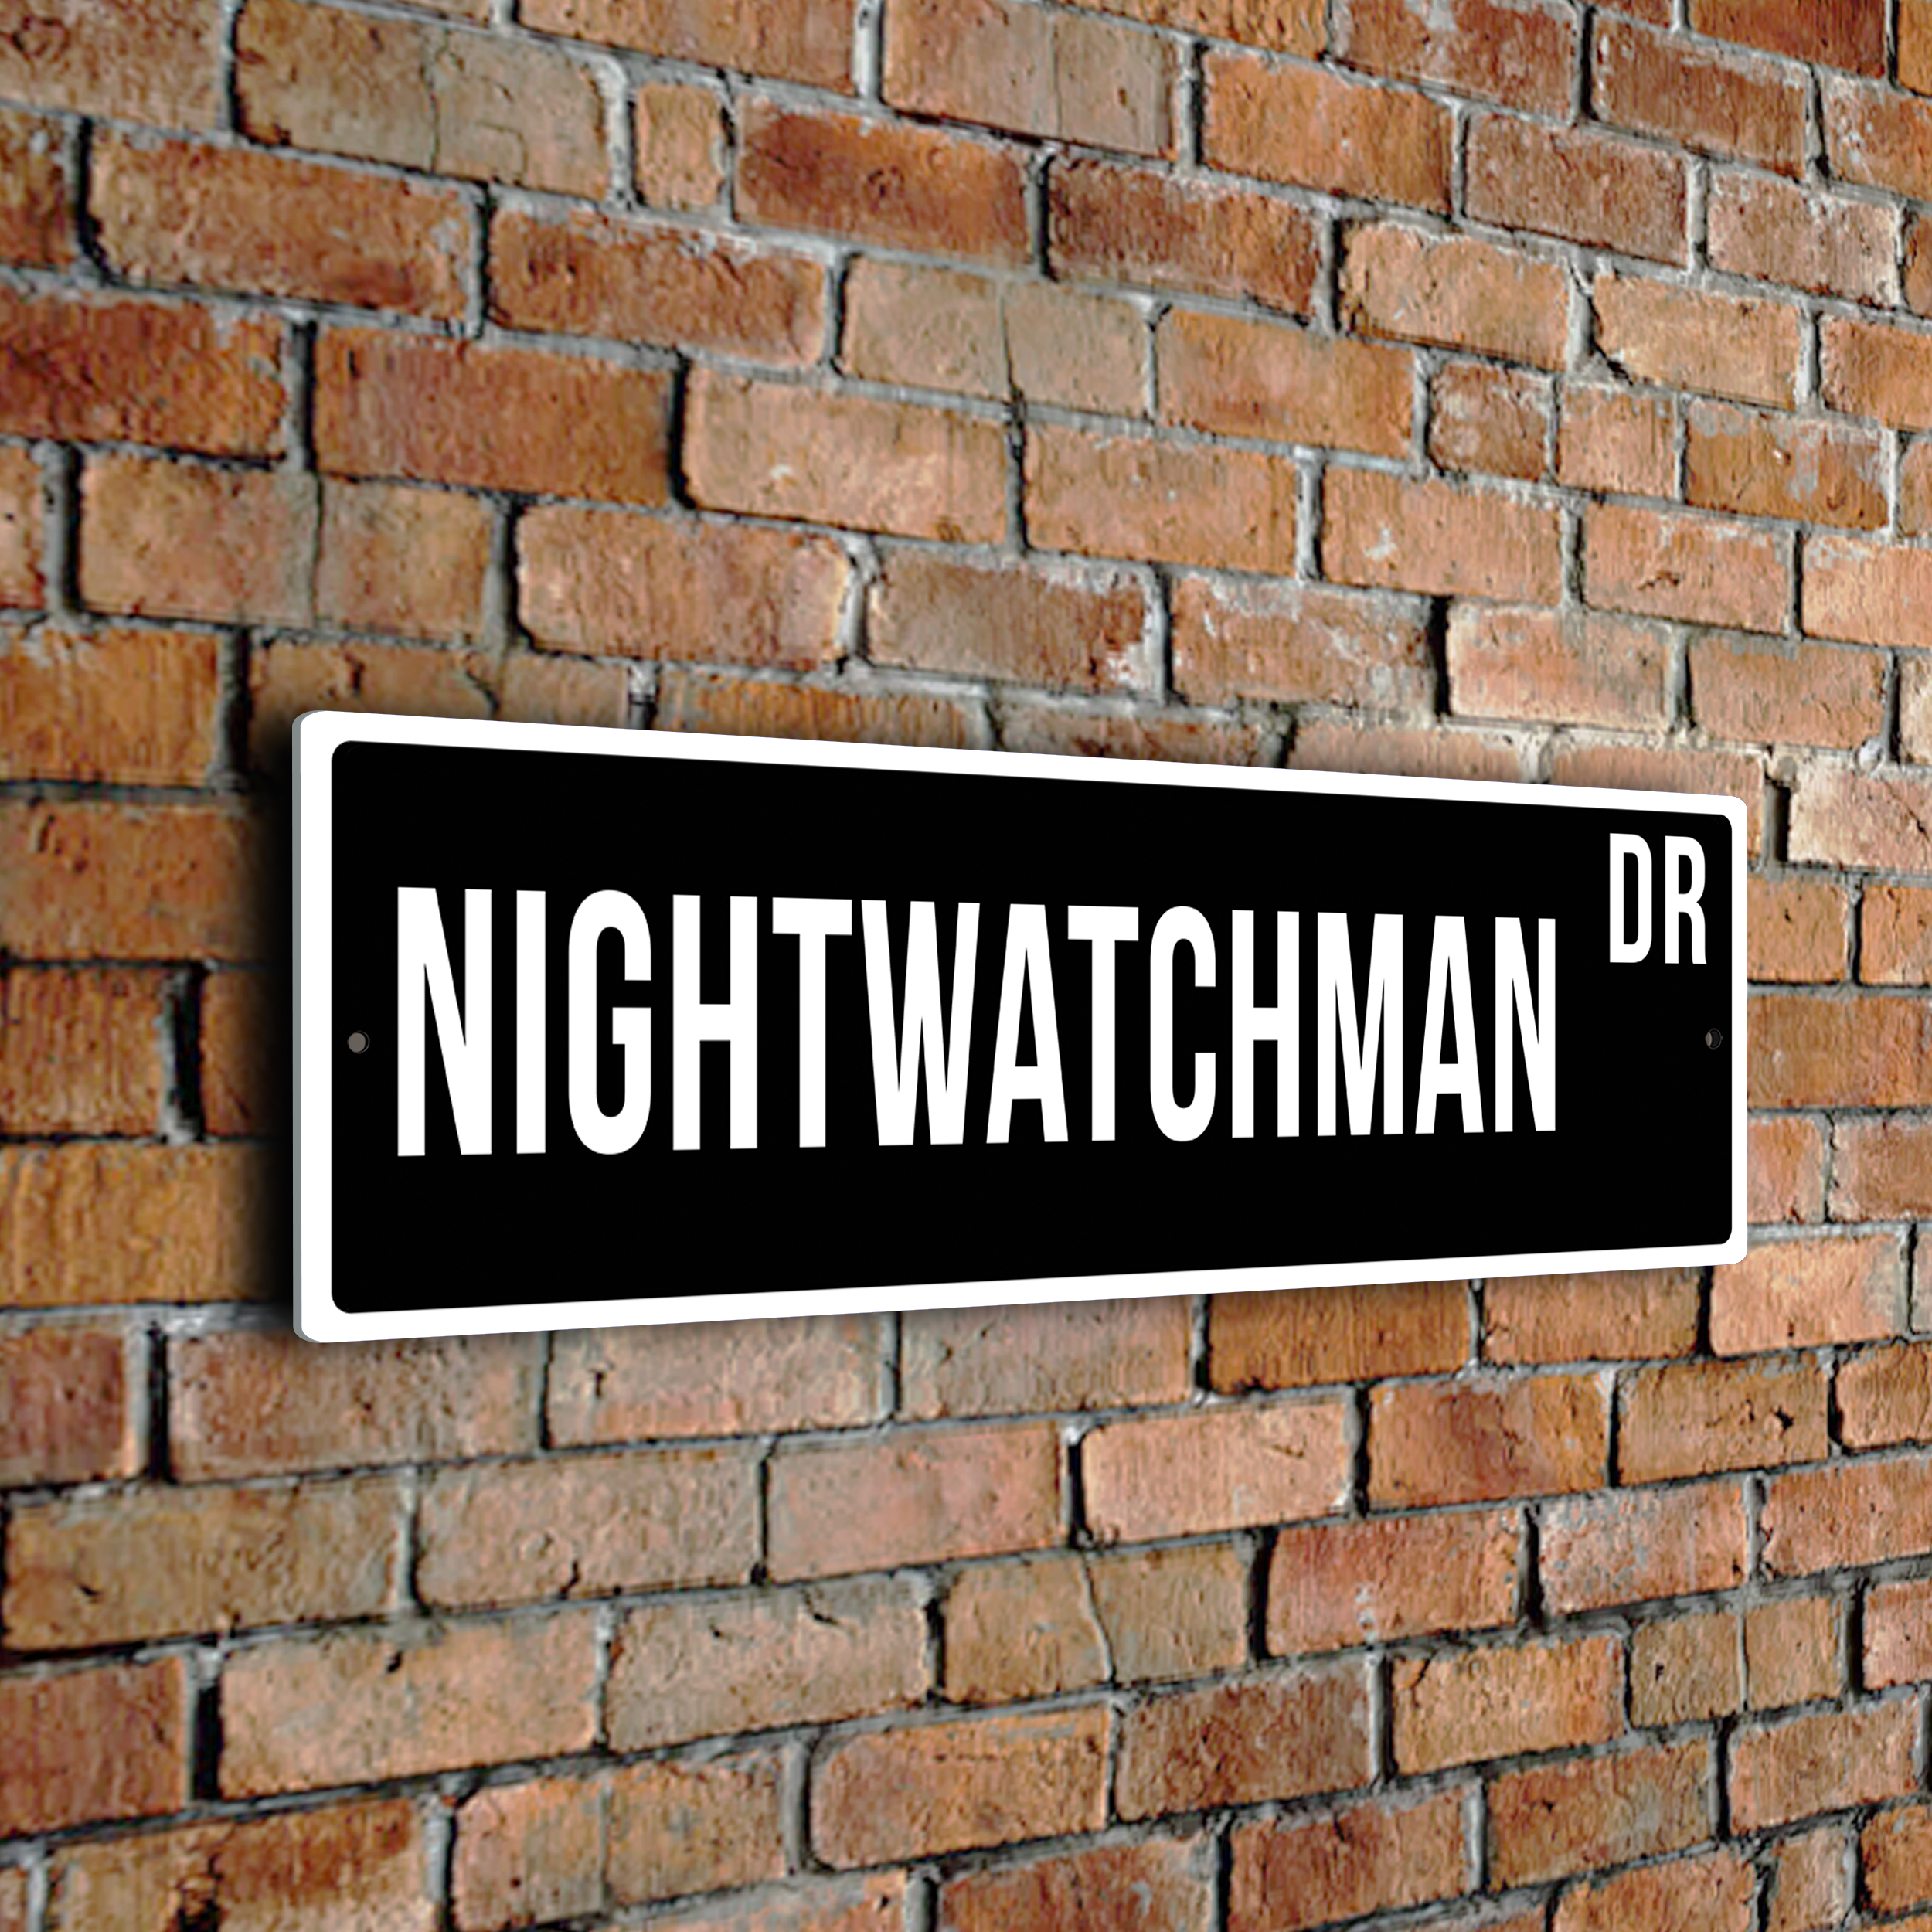 Nightwatchman street sign